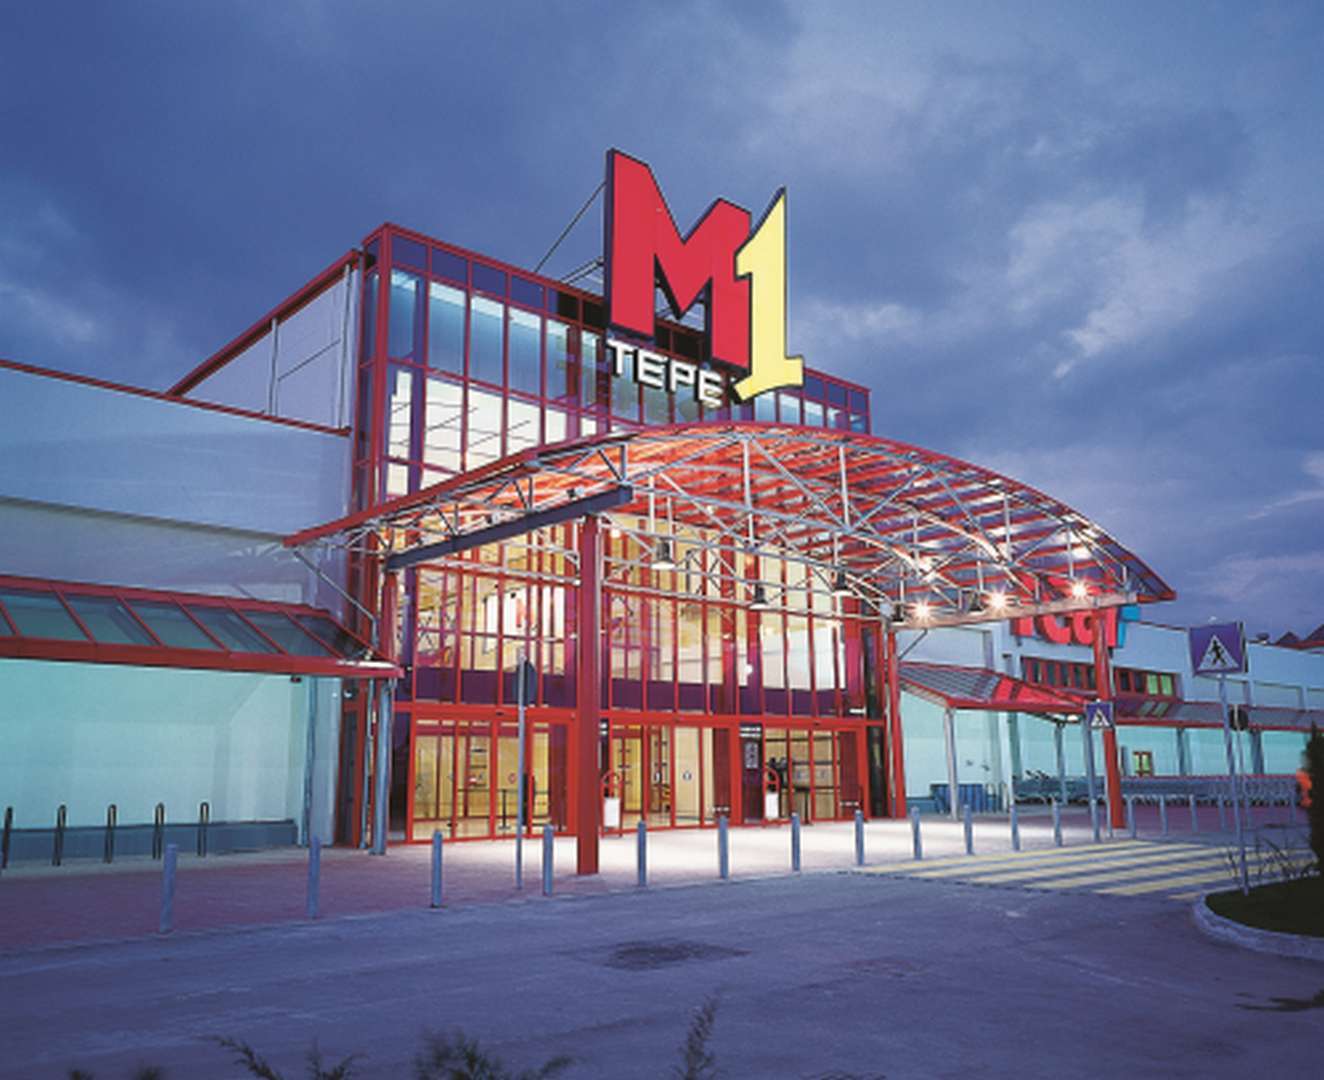 M1 Gaziantep Alışveriş Merkezi